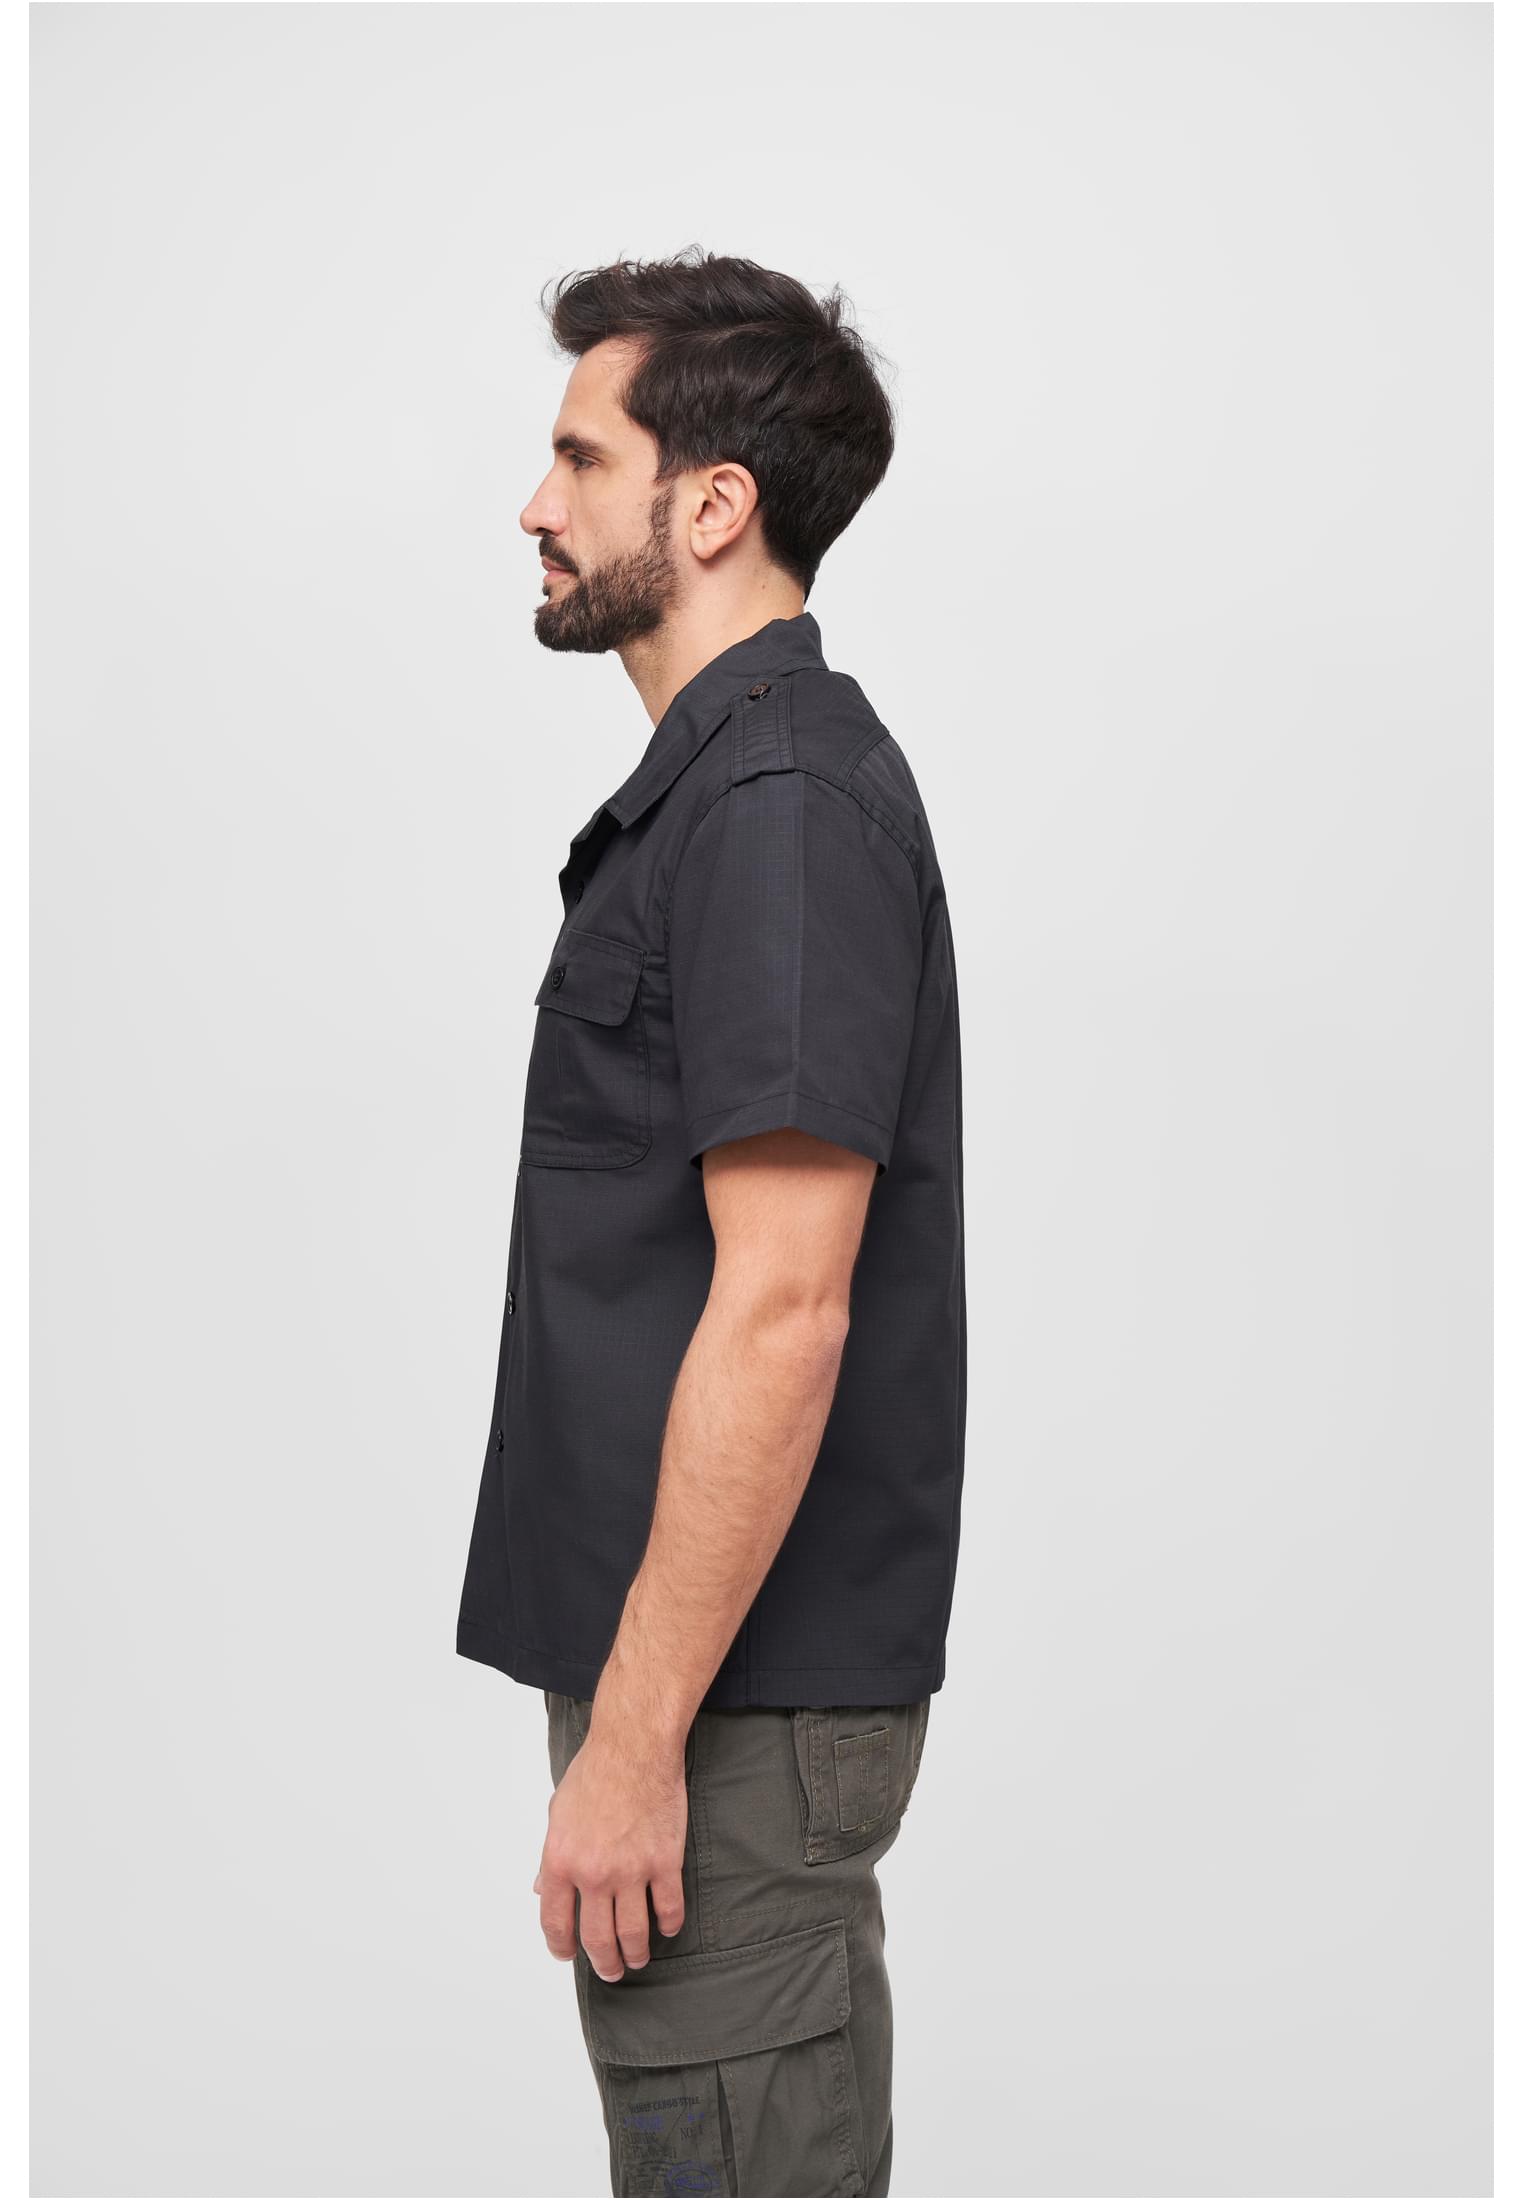 Hemden US Shirt Ripstop shortsleeve in Farbe black